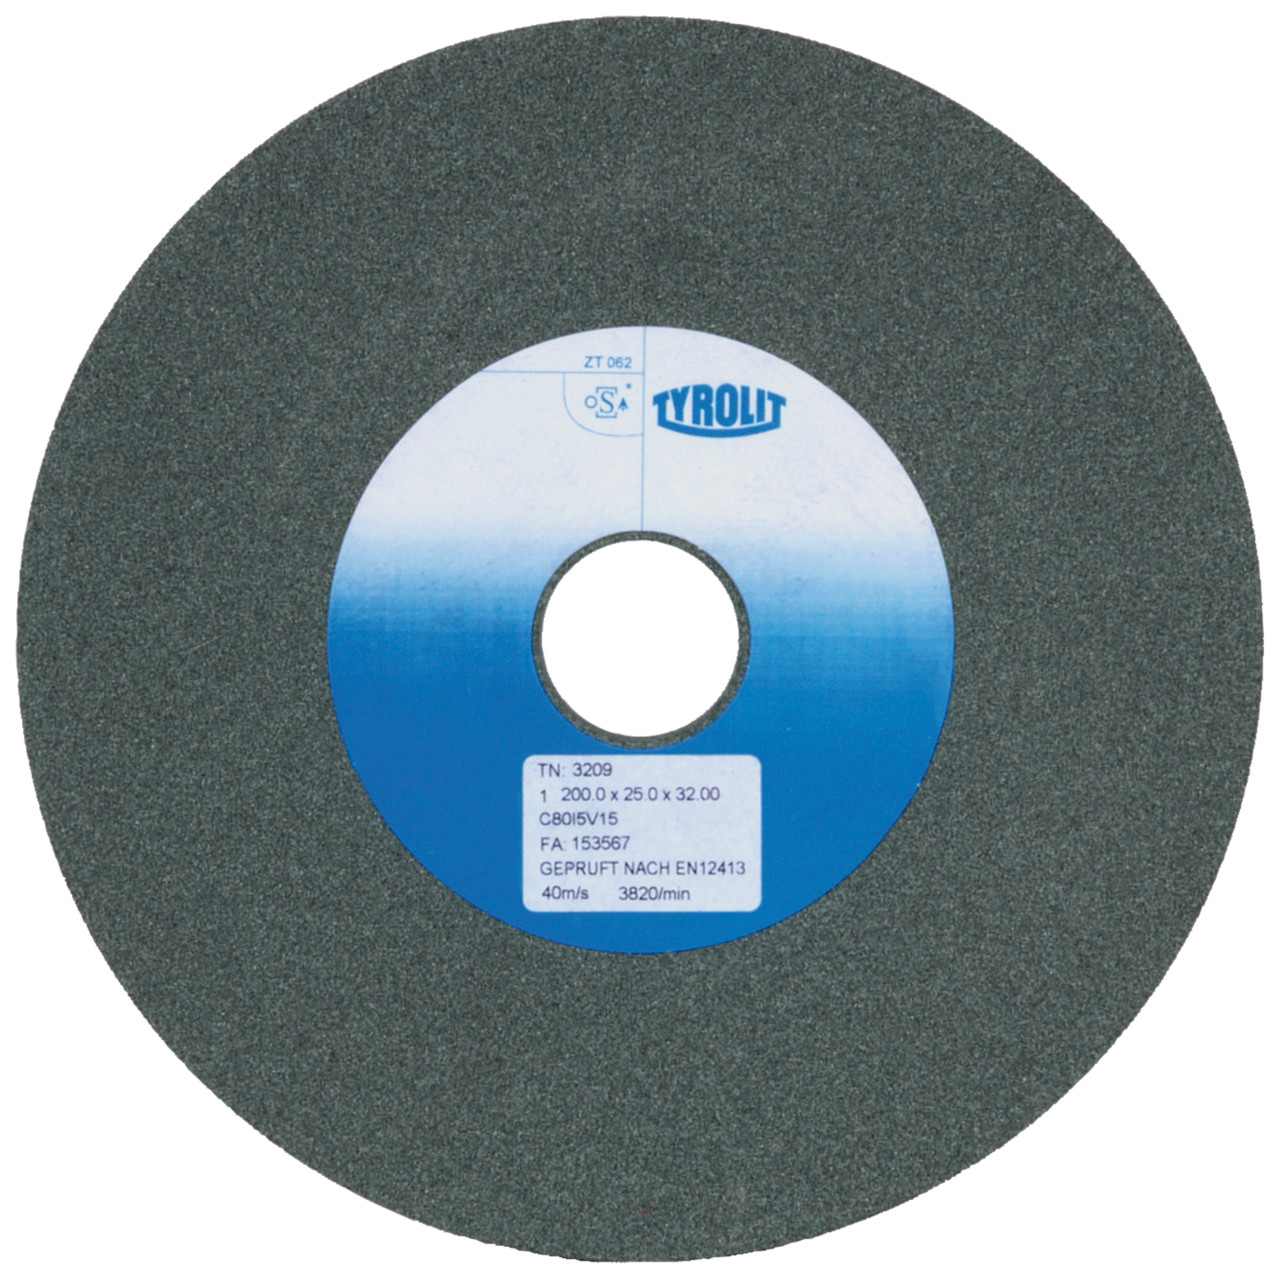 TYROLIT discos de desbaste cerámicos convencionales DxDxH 175x25x32 Para metales no férricos, forma: 1, Art. 34287486